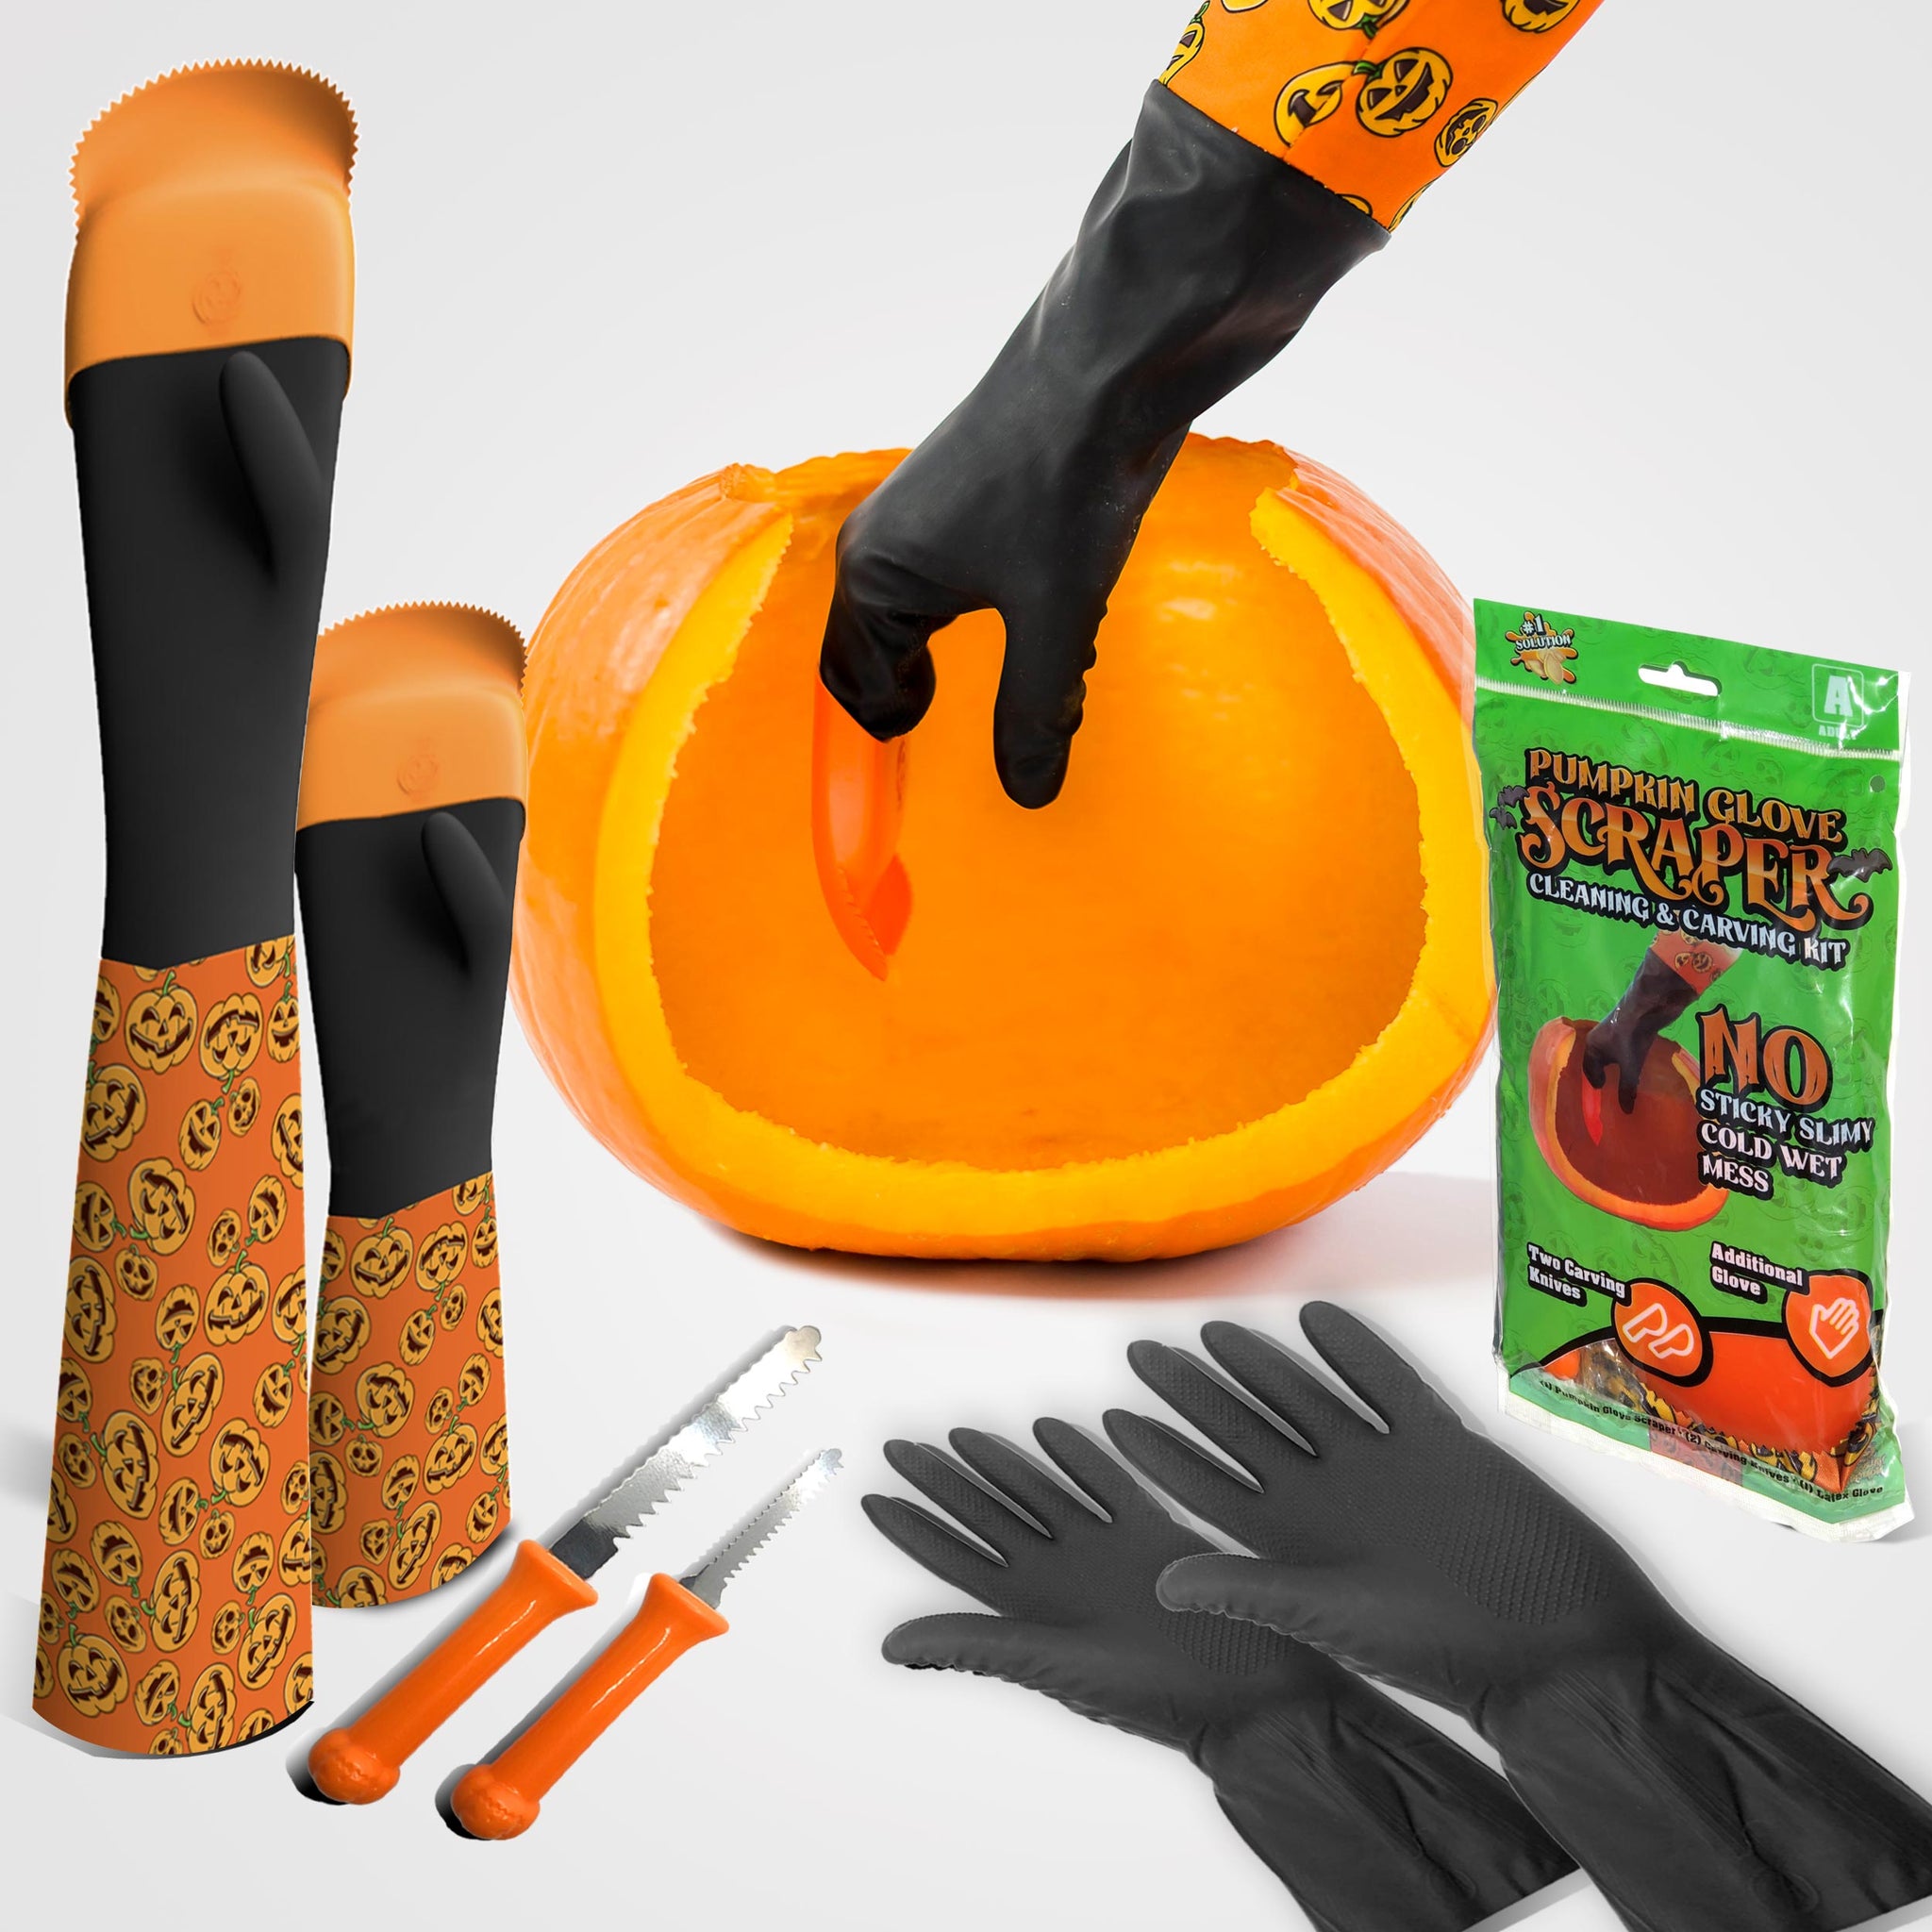 Pumpkin Glove Scraper Cleaning Carving Kit - Adult